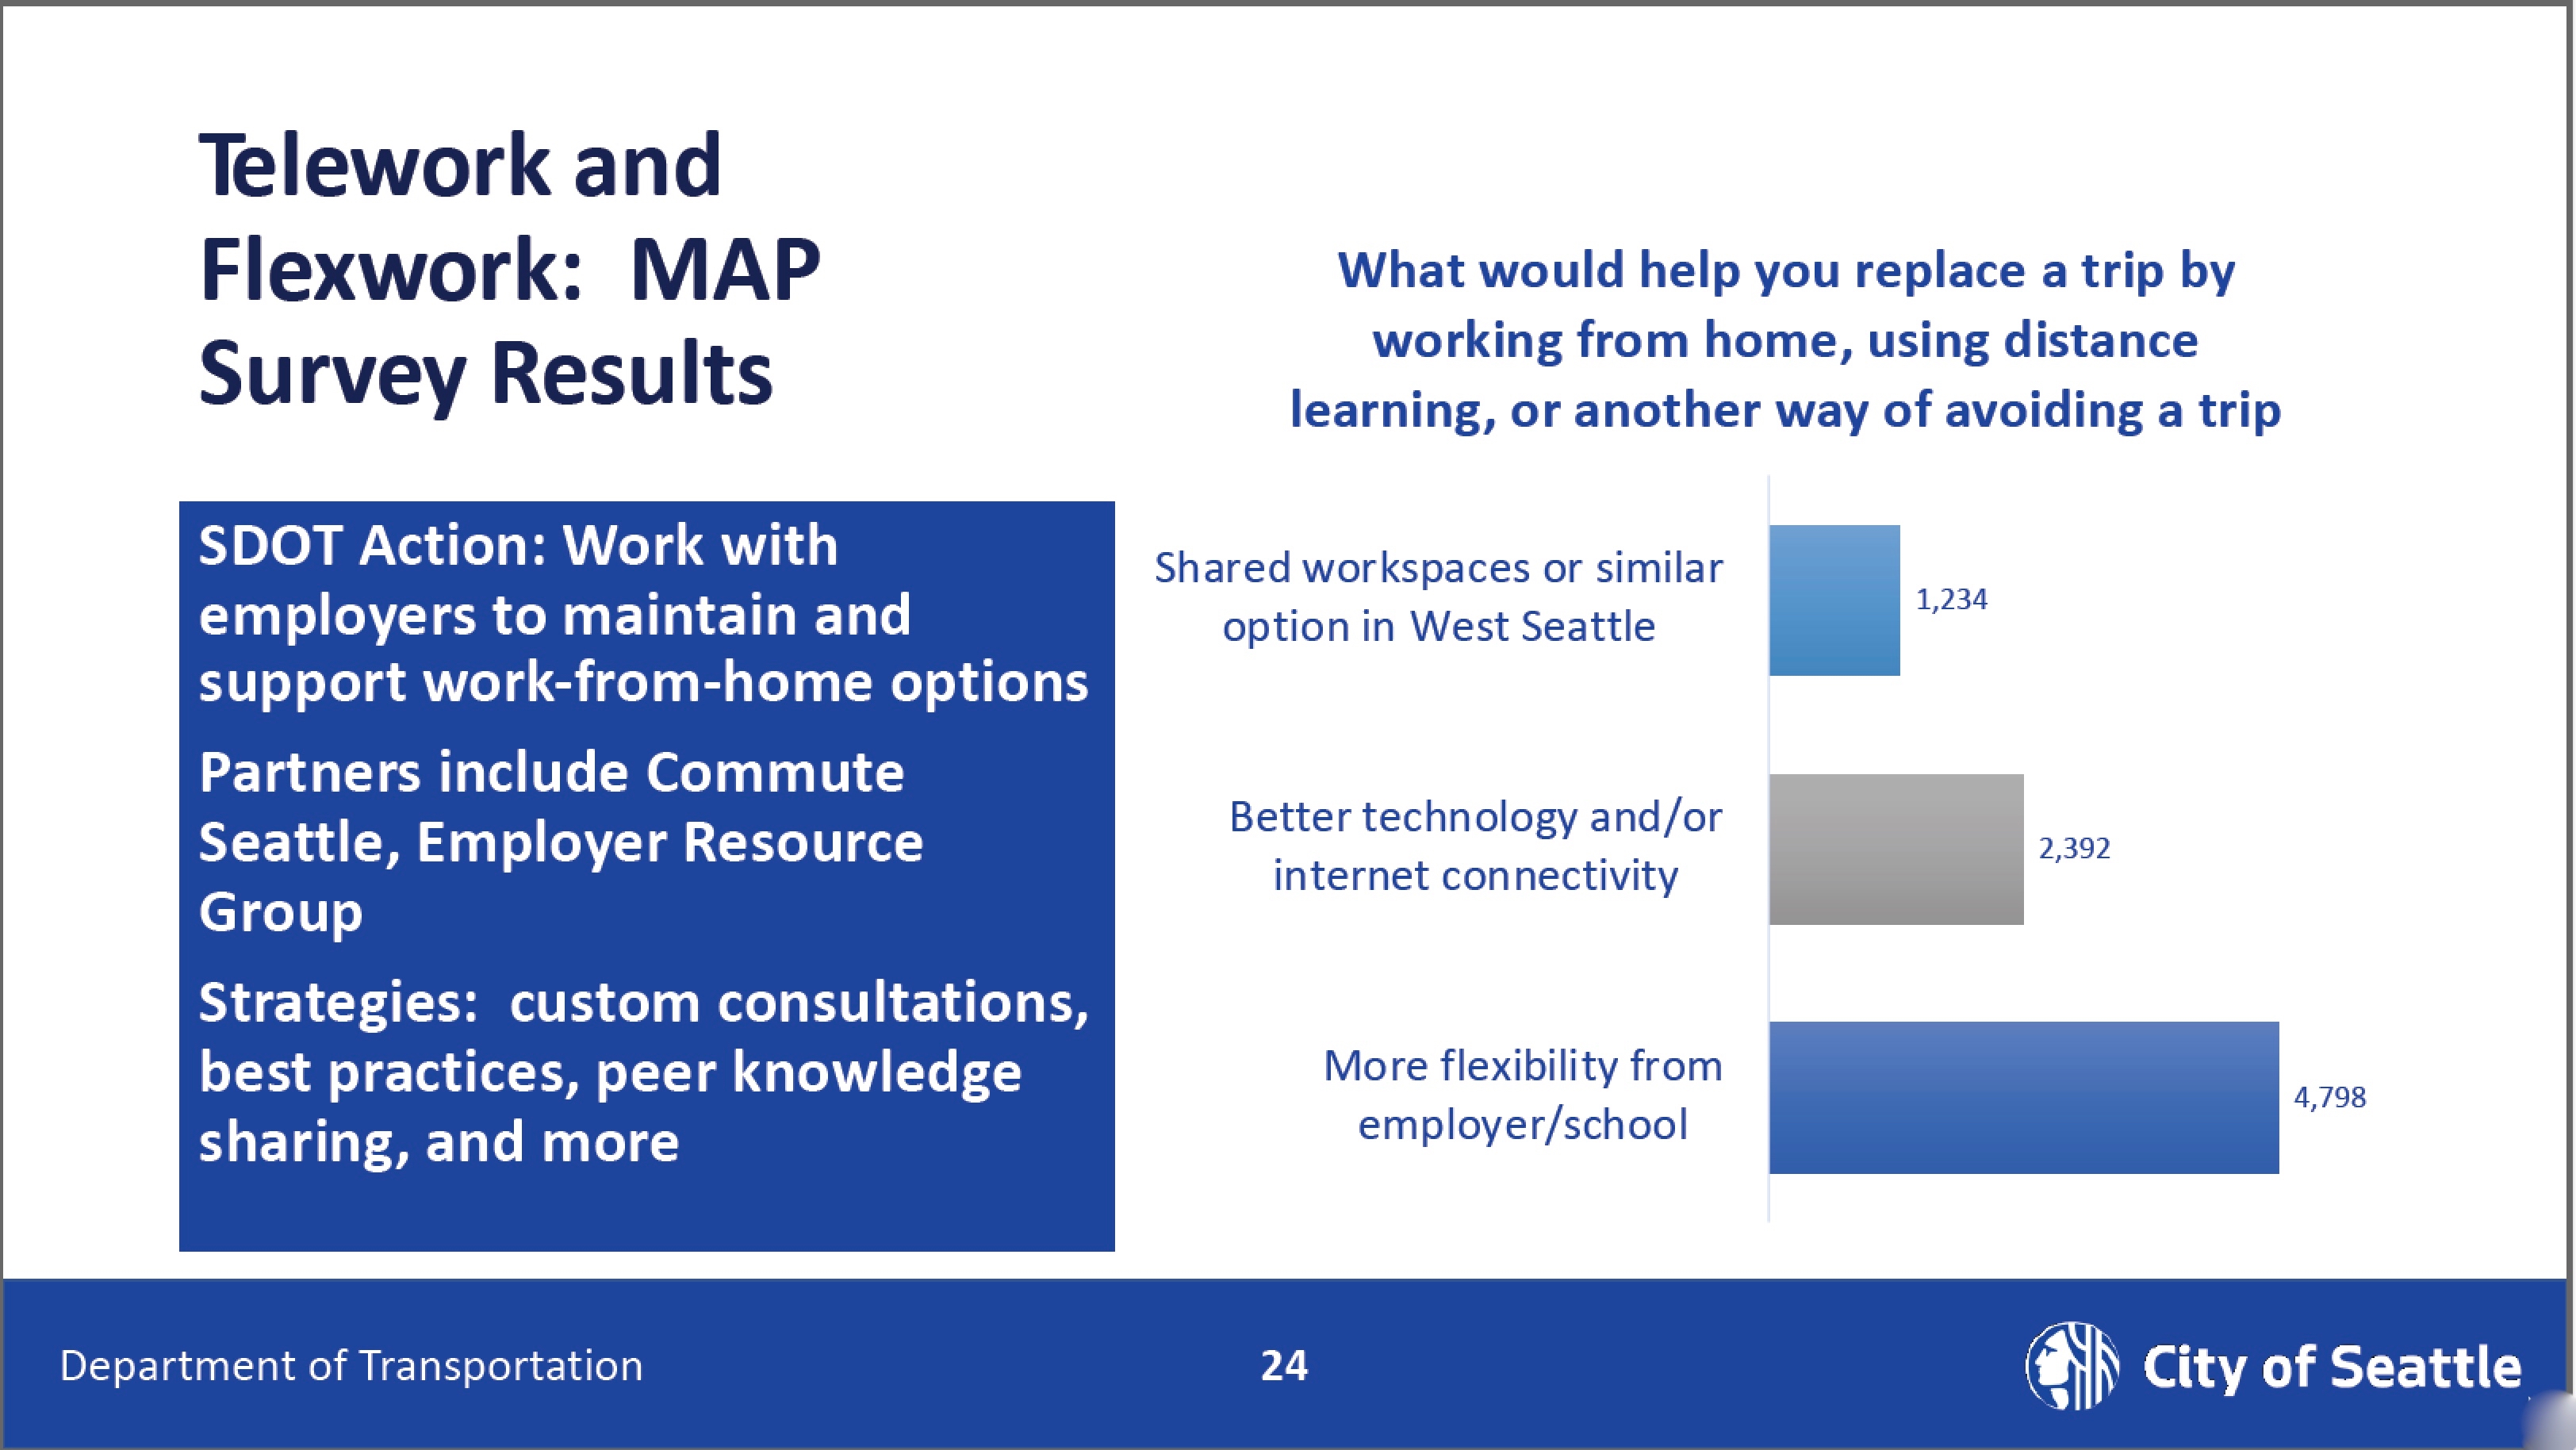 Telework and Flexwork: MAP survey results